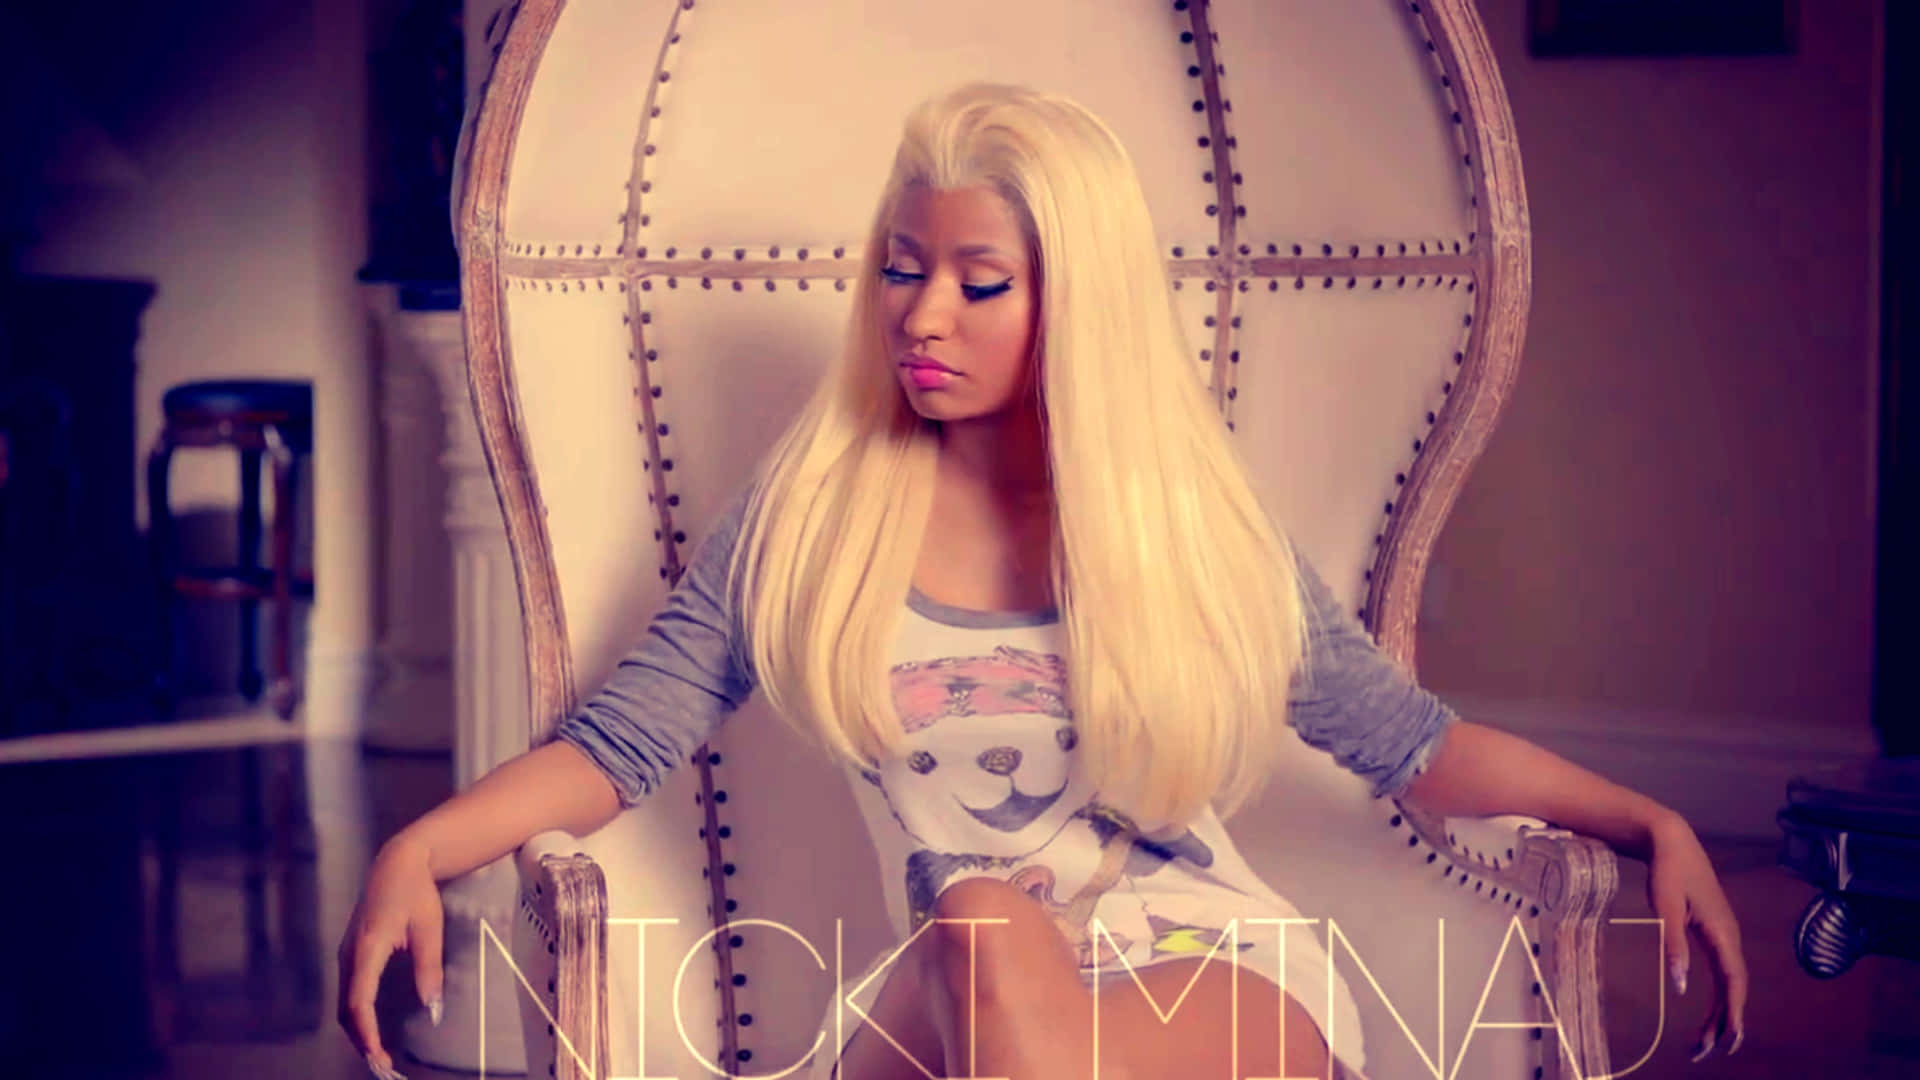 Nicki Minaj striking a pose in a colorful outfit